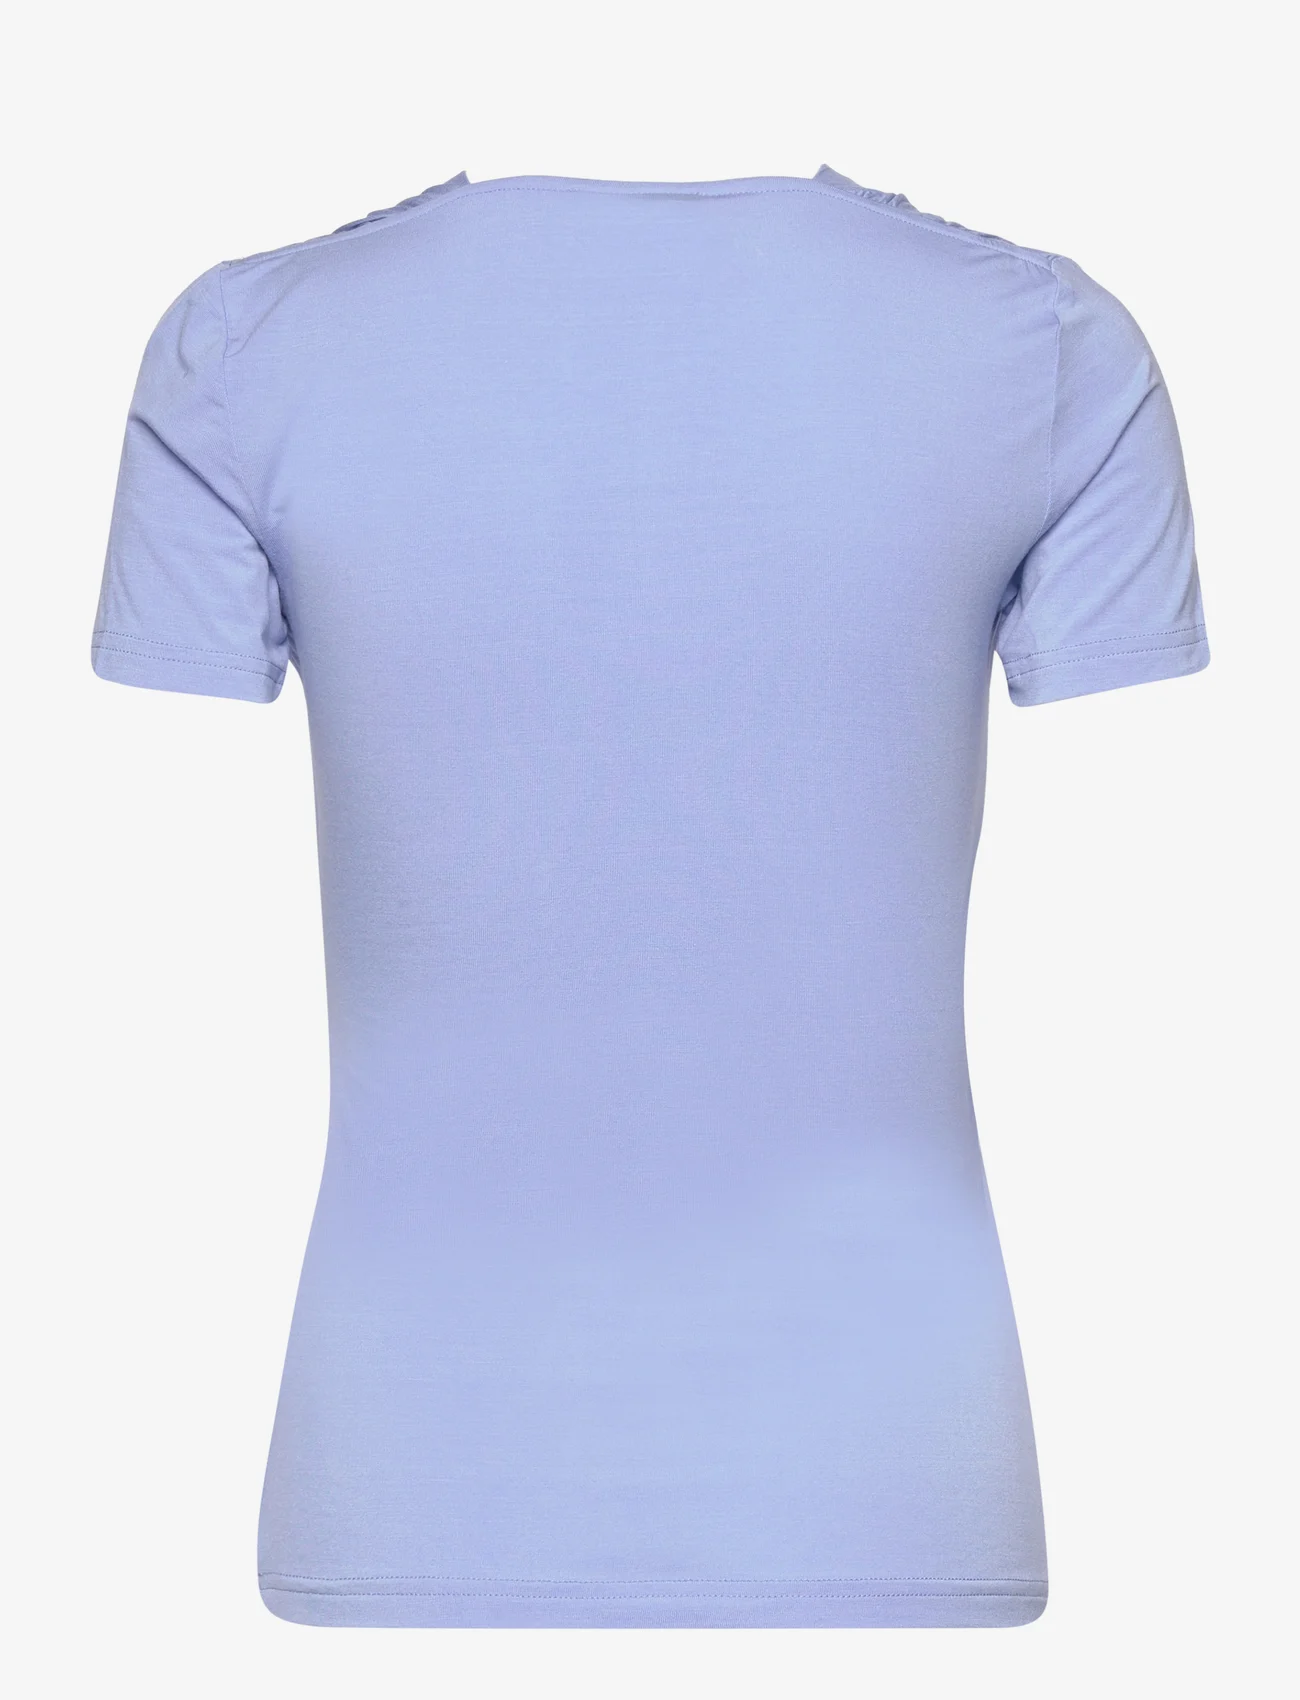 Rosemunde - Viscose t-shirt - t-shirts - blue heaven - 1